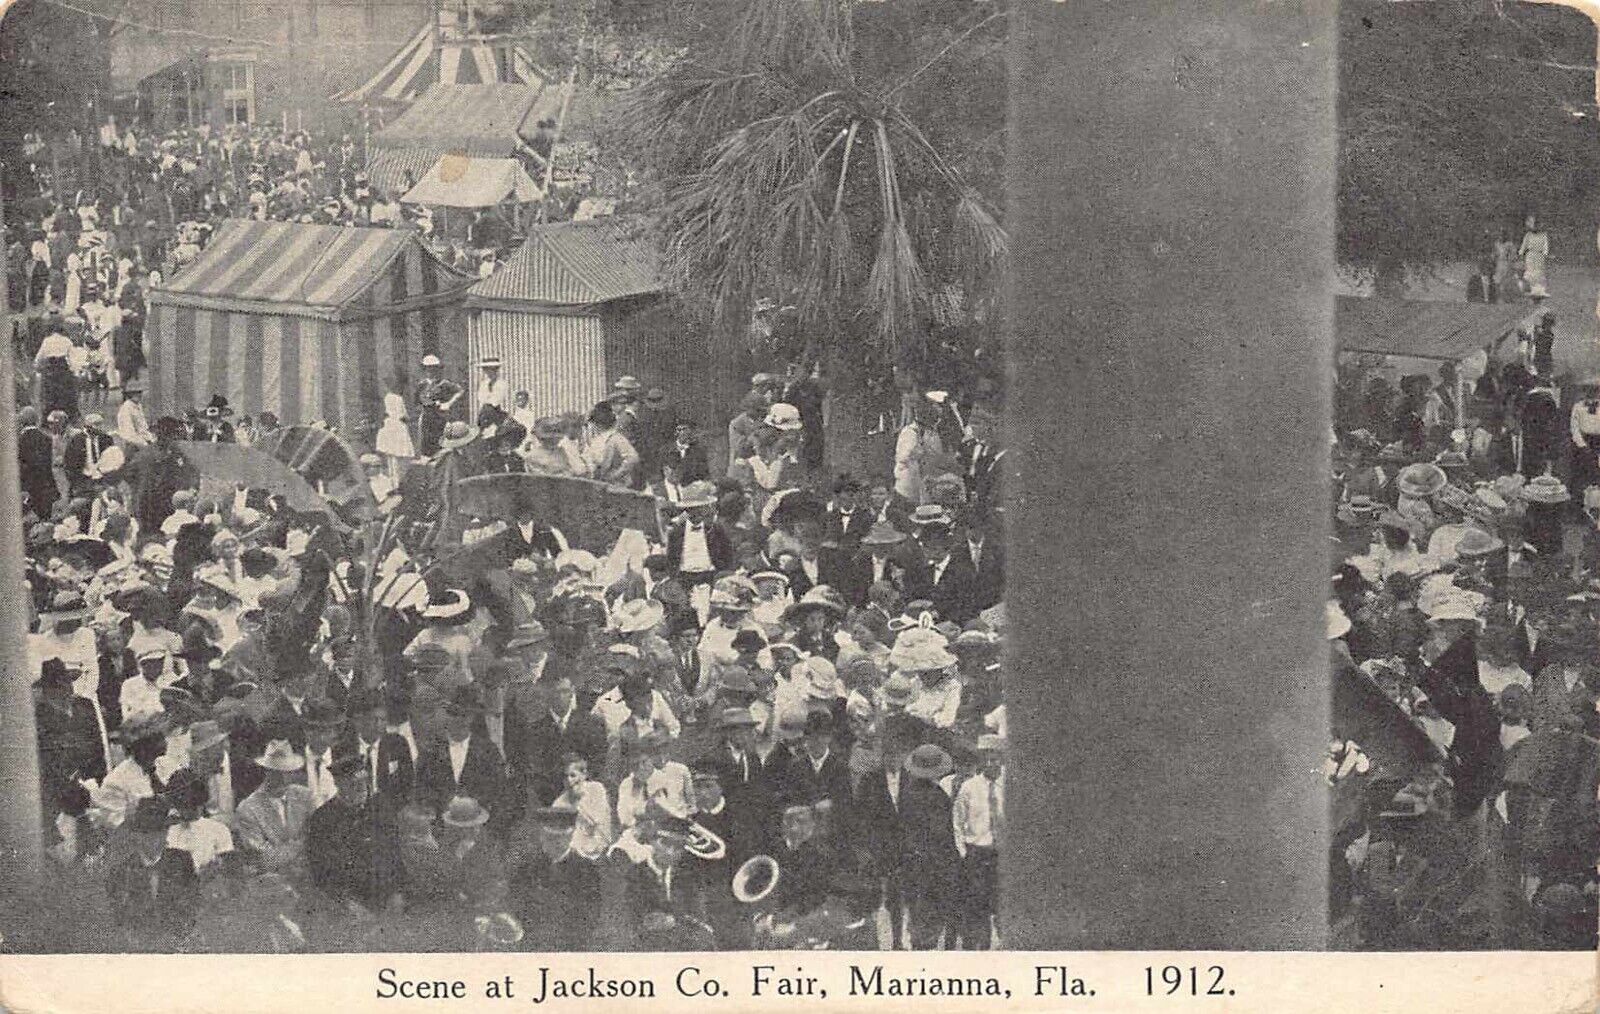 FL 1915 VERY RARE Florida Scene at Jackson County Fair in 1912 at Marianna FLA.